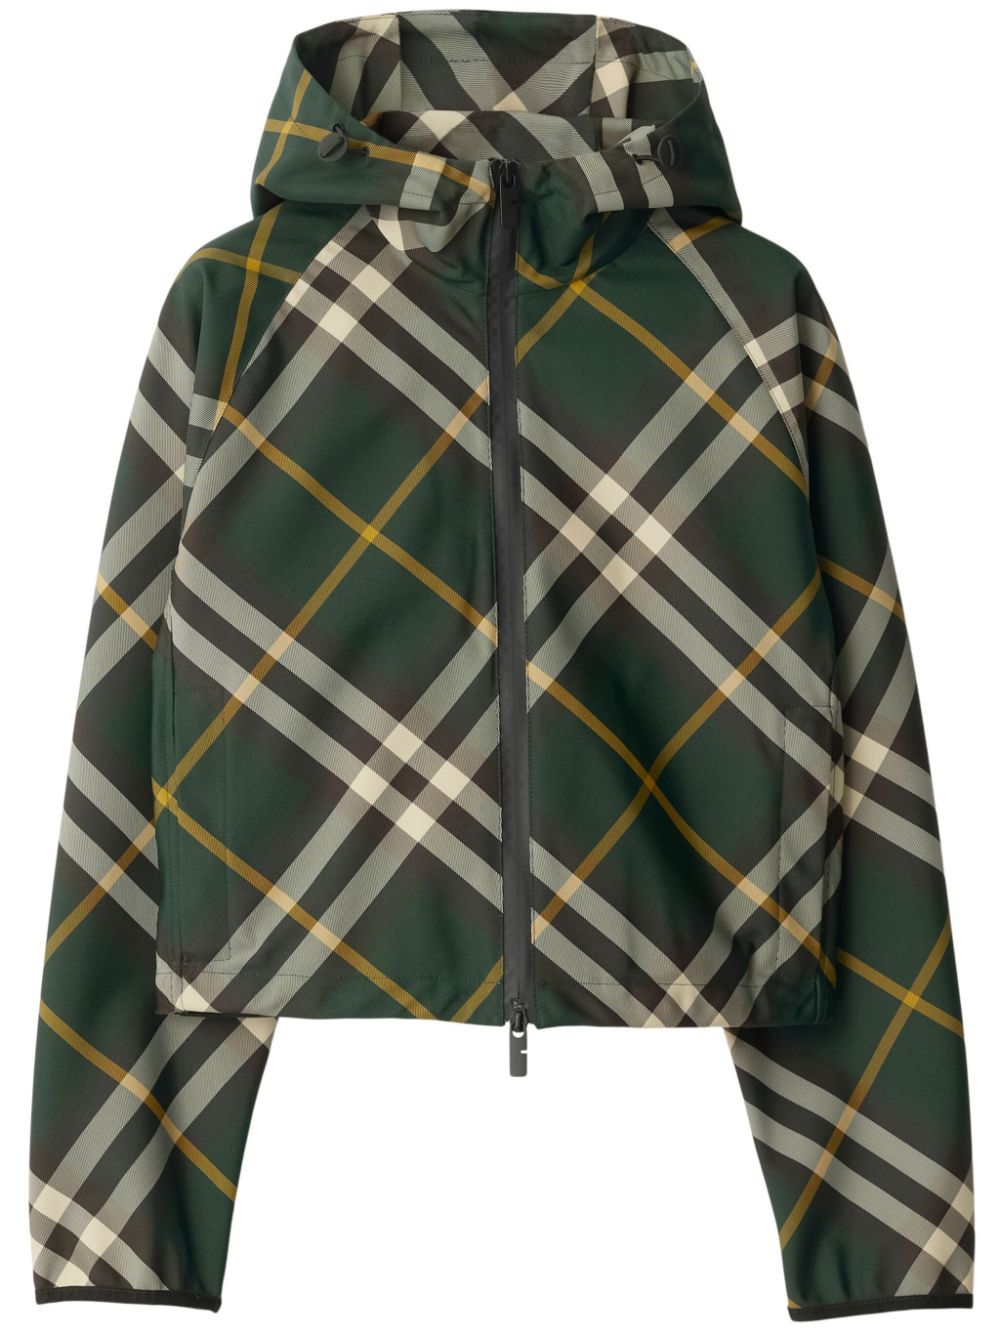 Check-pattern zip-up jacket<BR/><BR/><BR/>